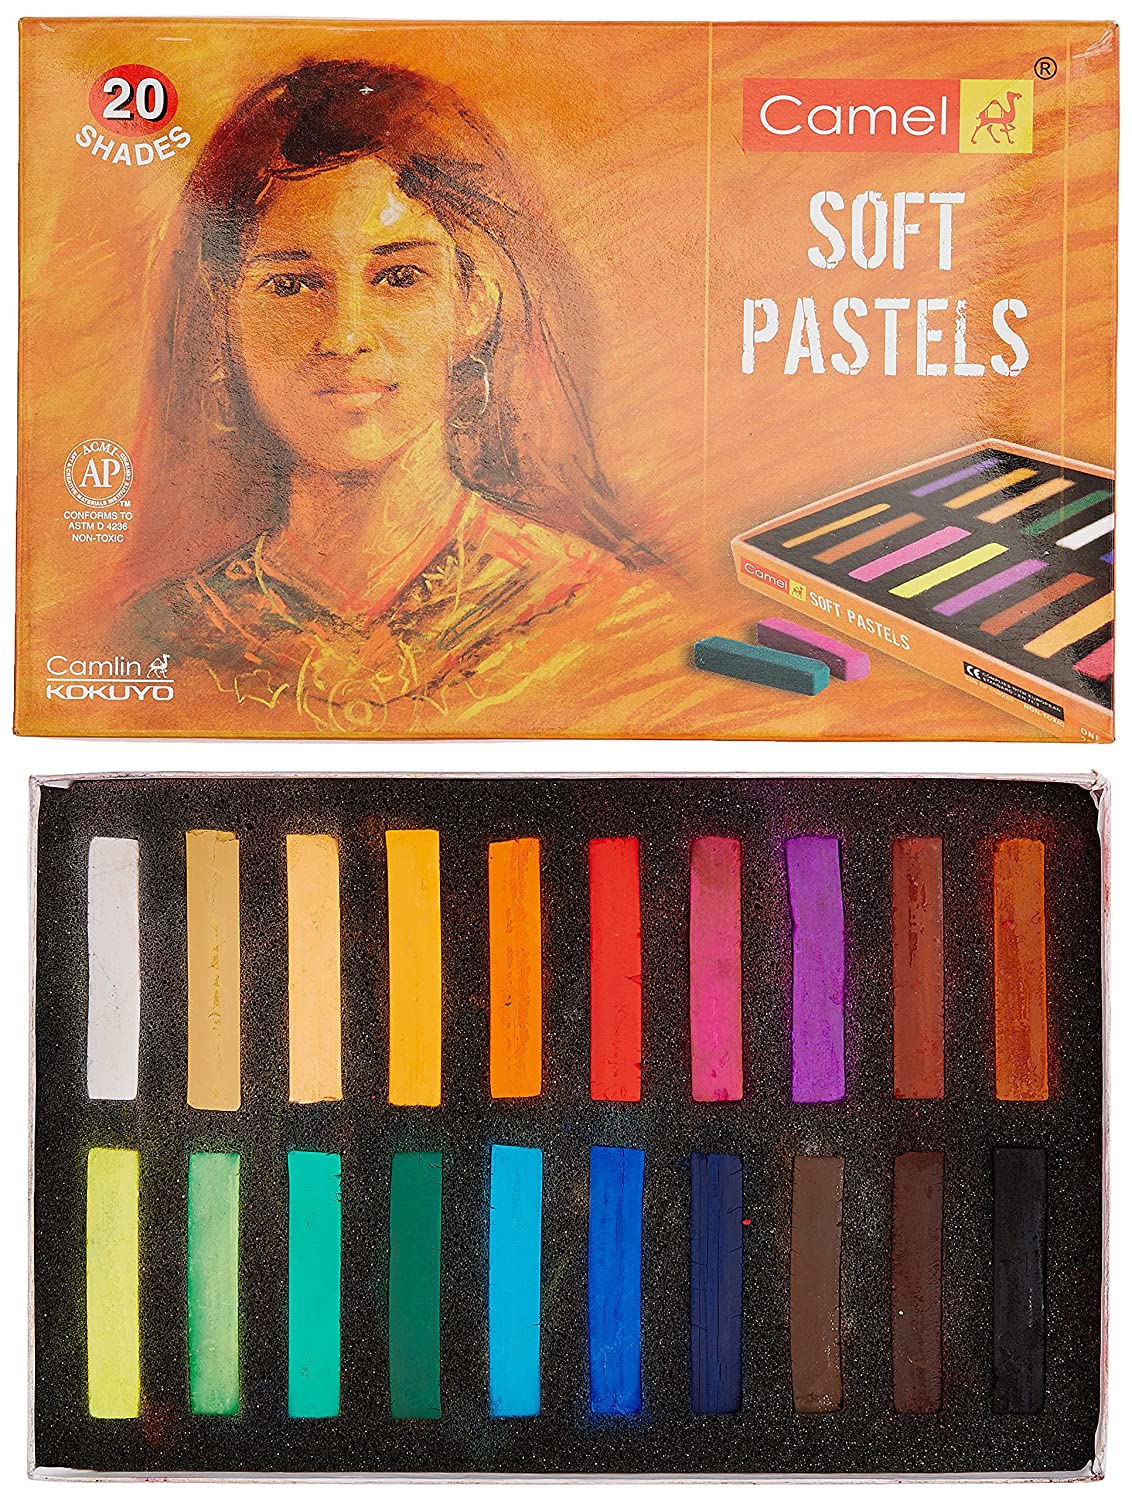 Camel soft pastels 20 shades